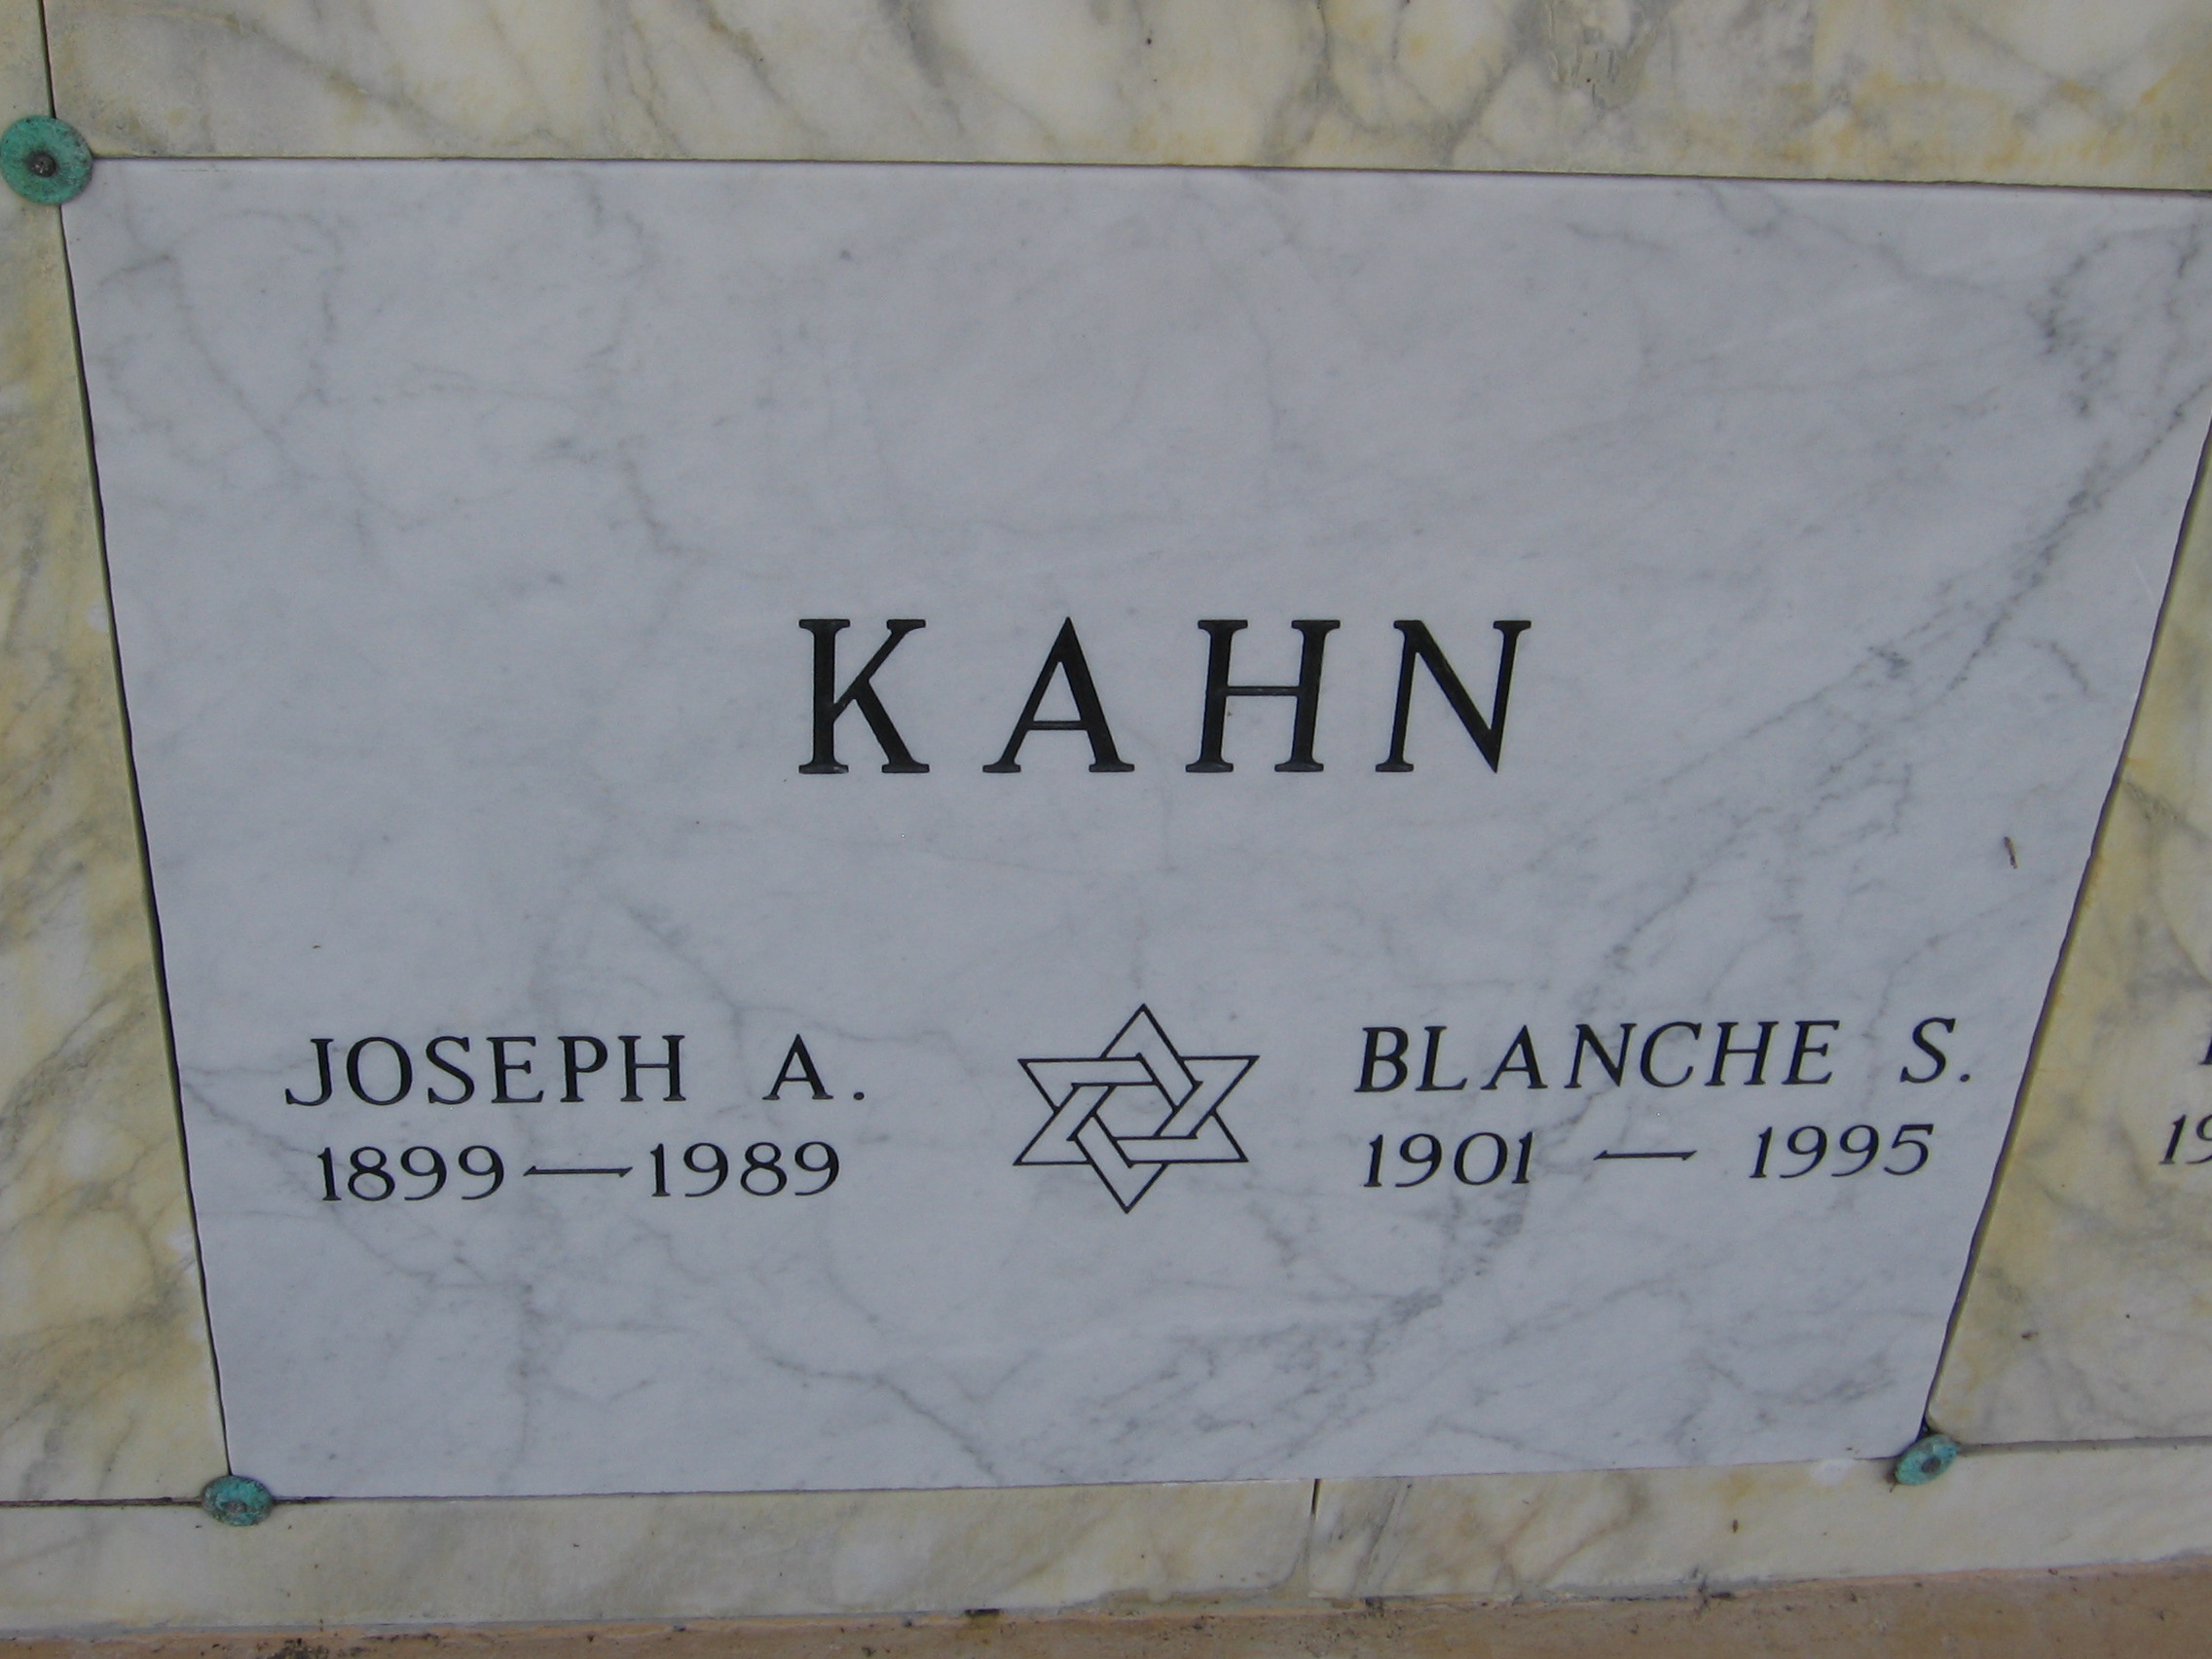 Joseph A Kahn